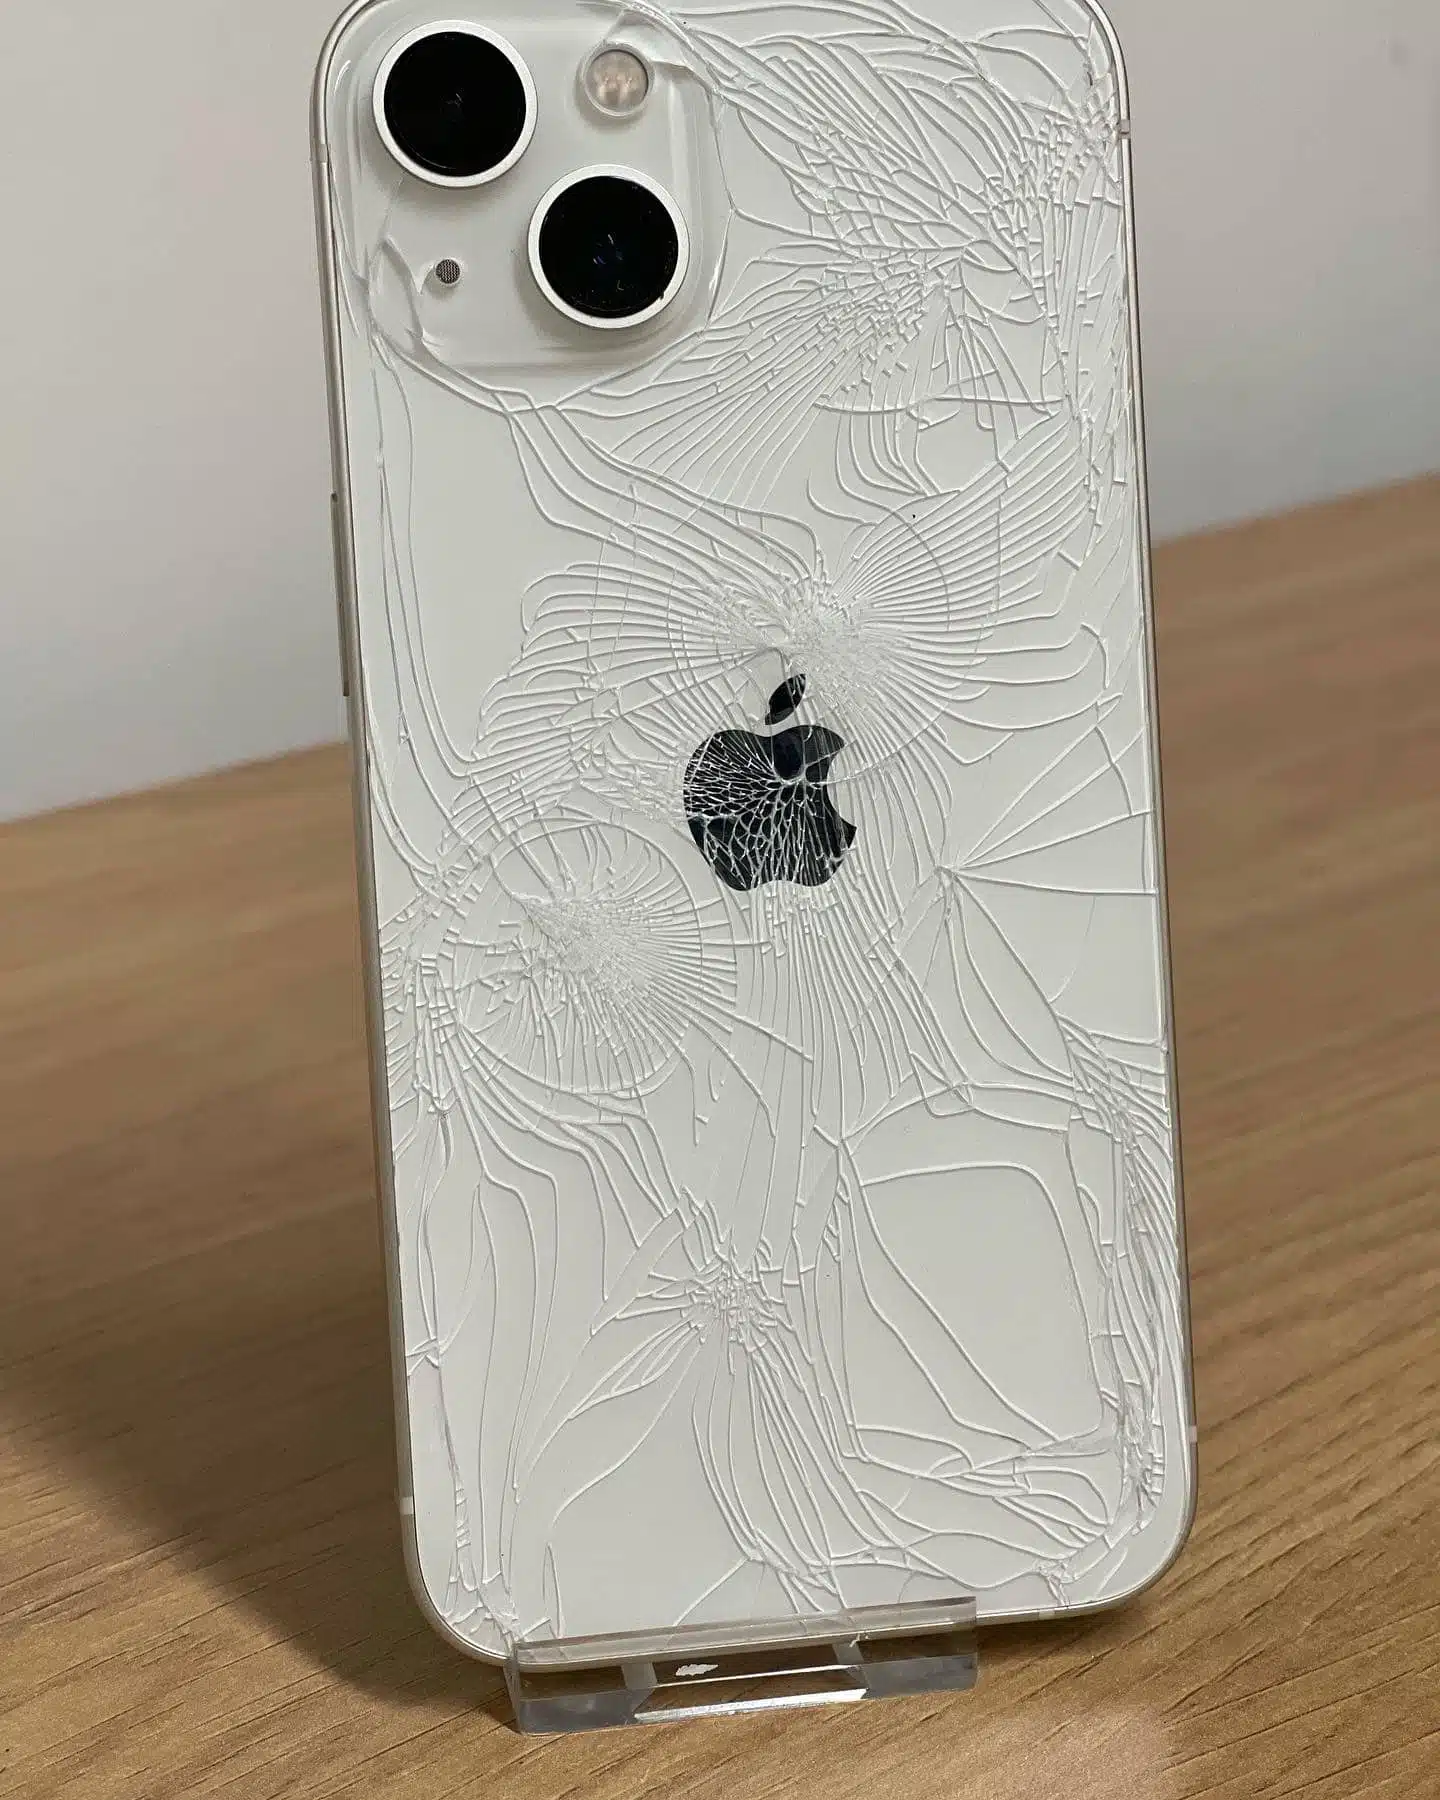 iPhone smashed back glass